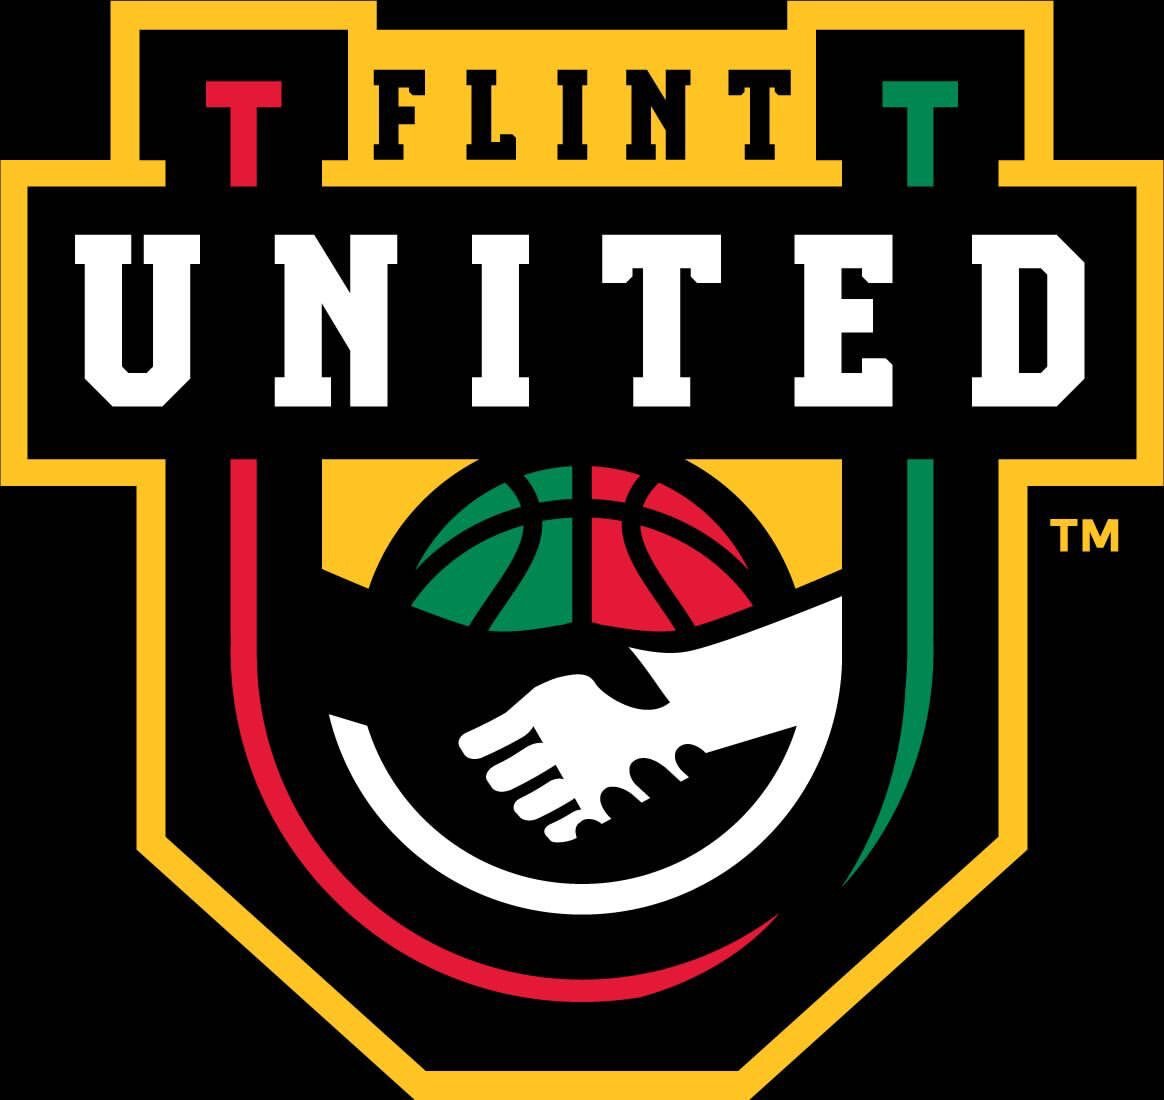 The new logo for the Flint United basketball team.